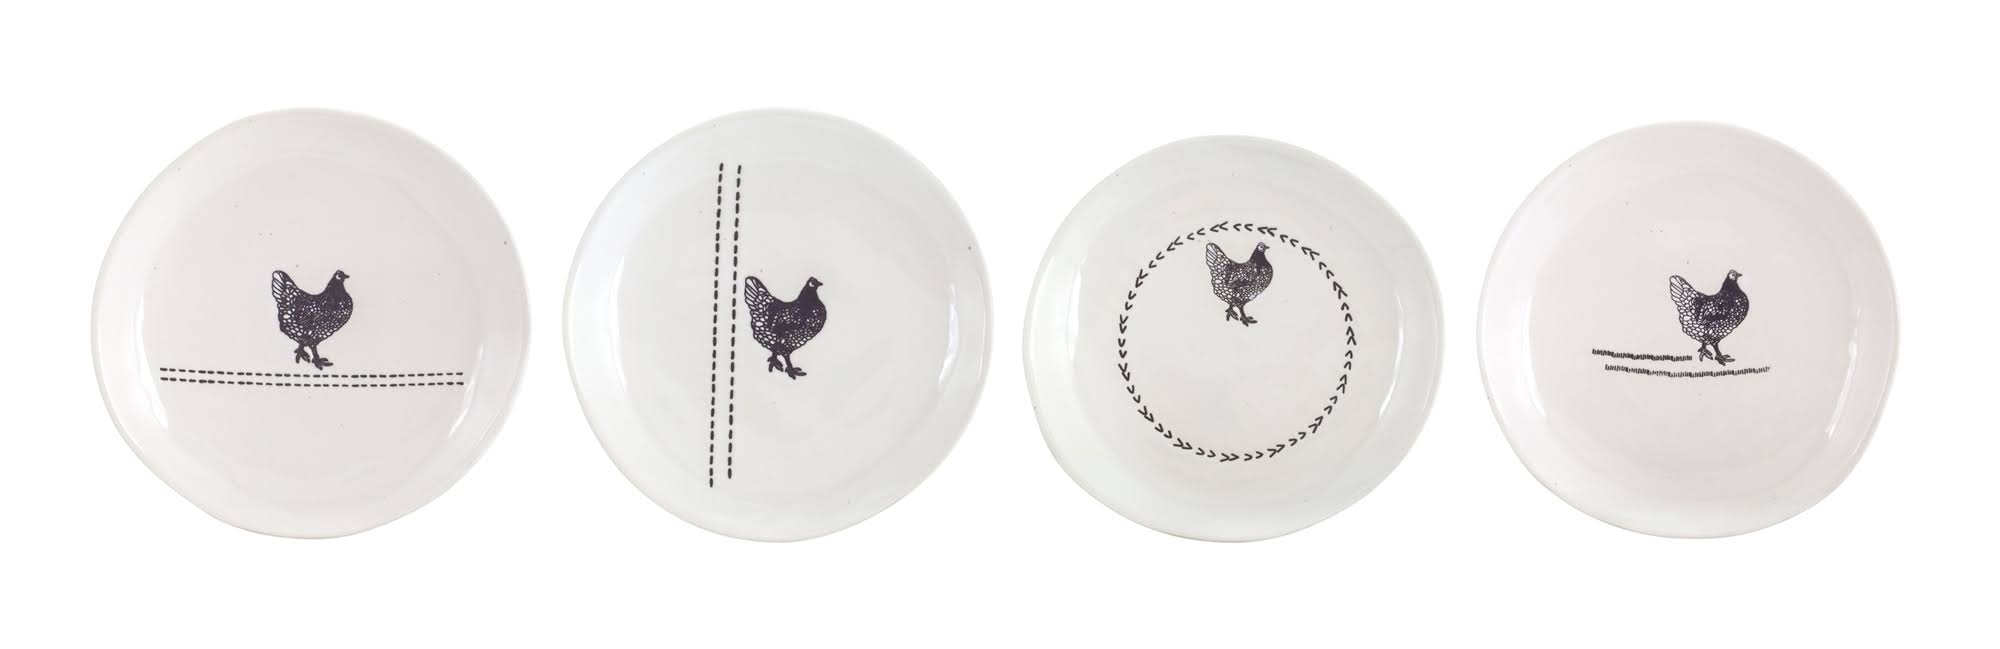 Melrose | Chicken Plate (Set of 8) 6.5"D Stoneware 74542DS